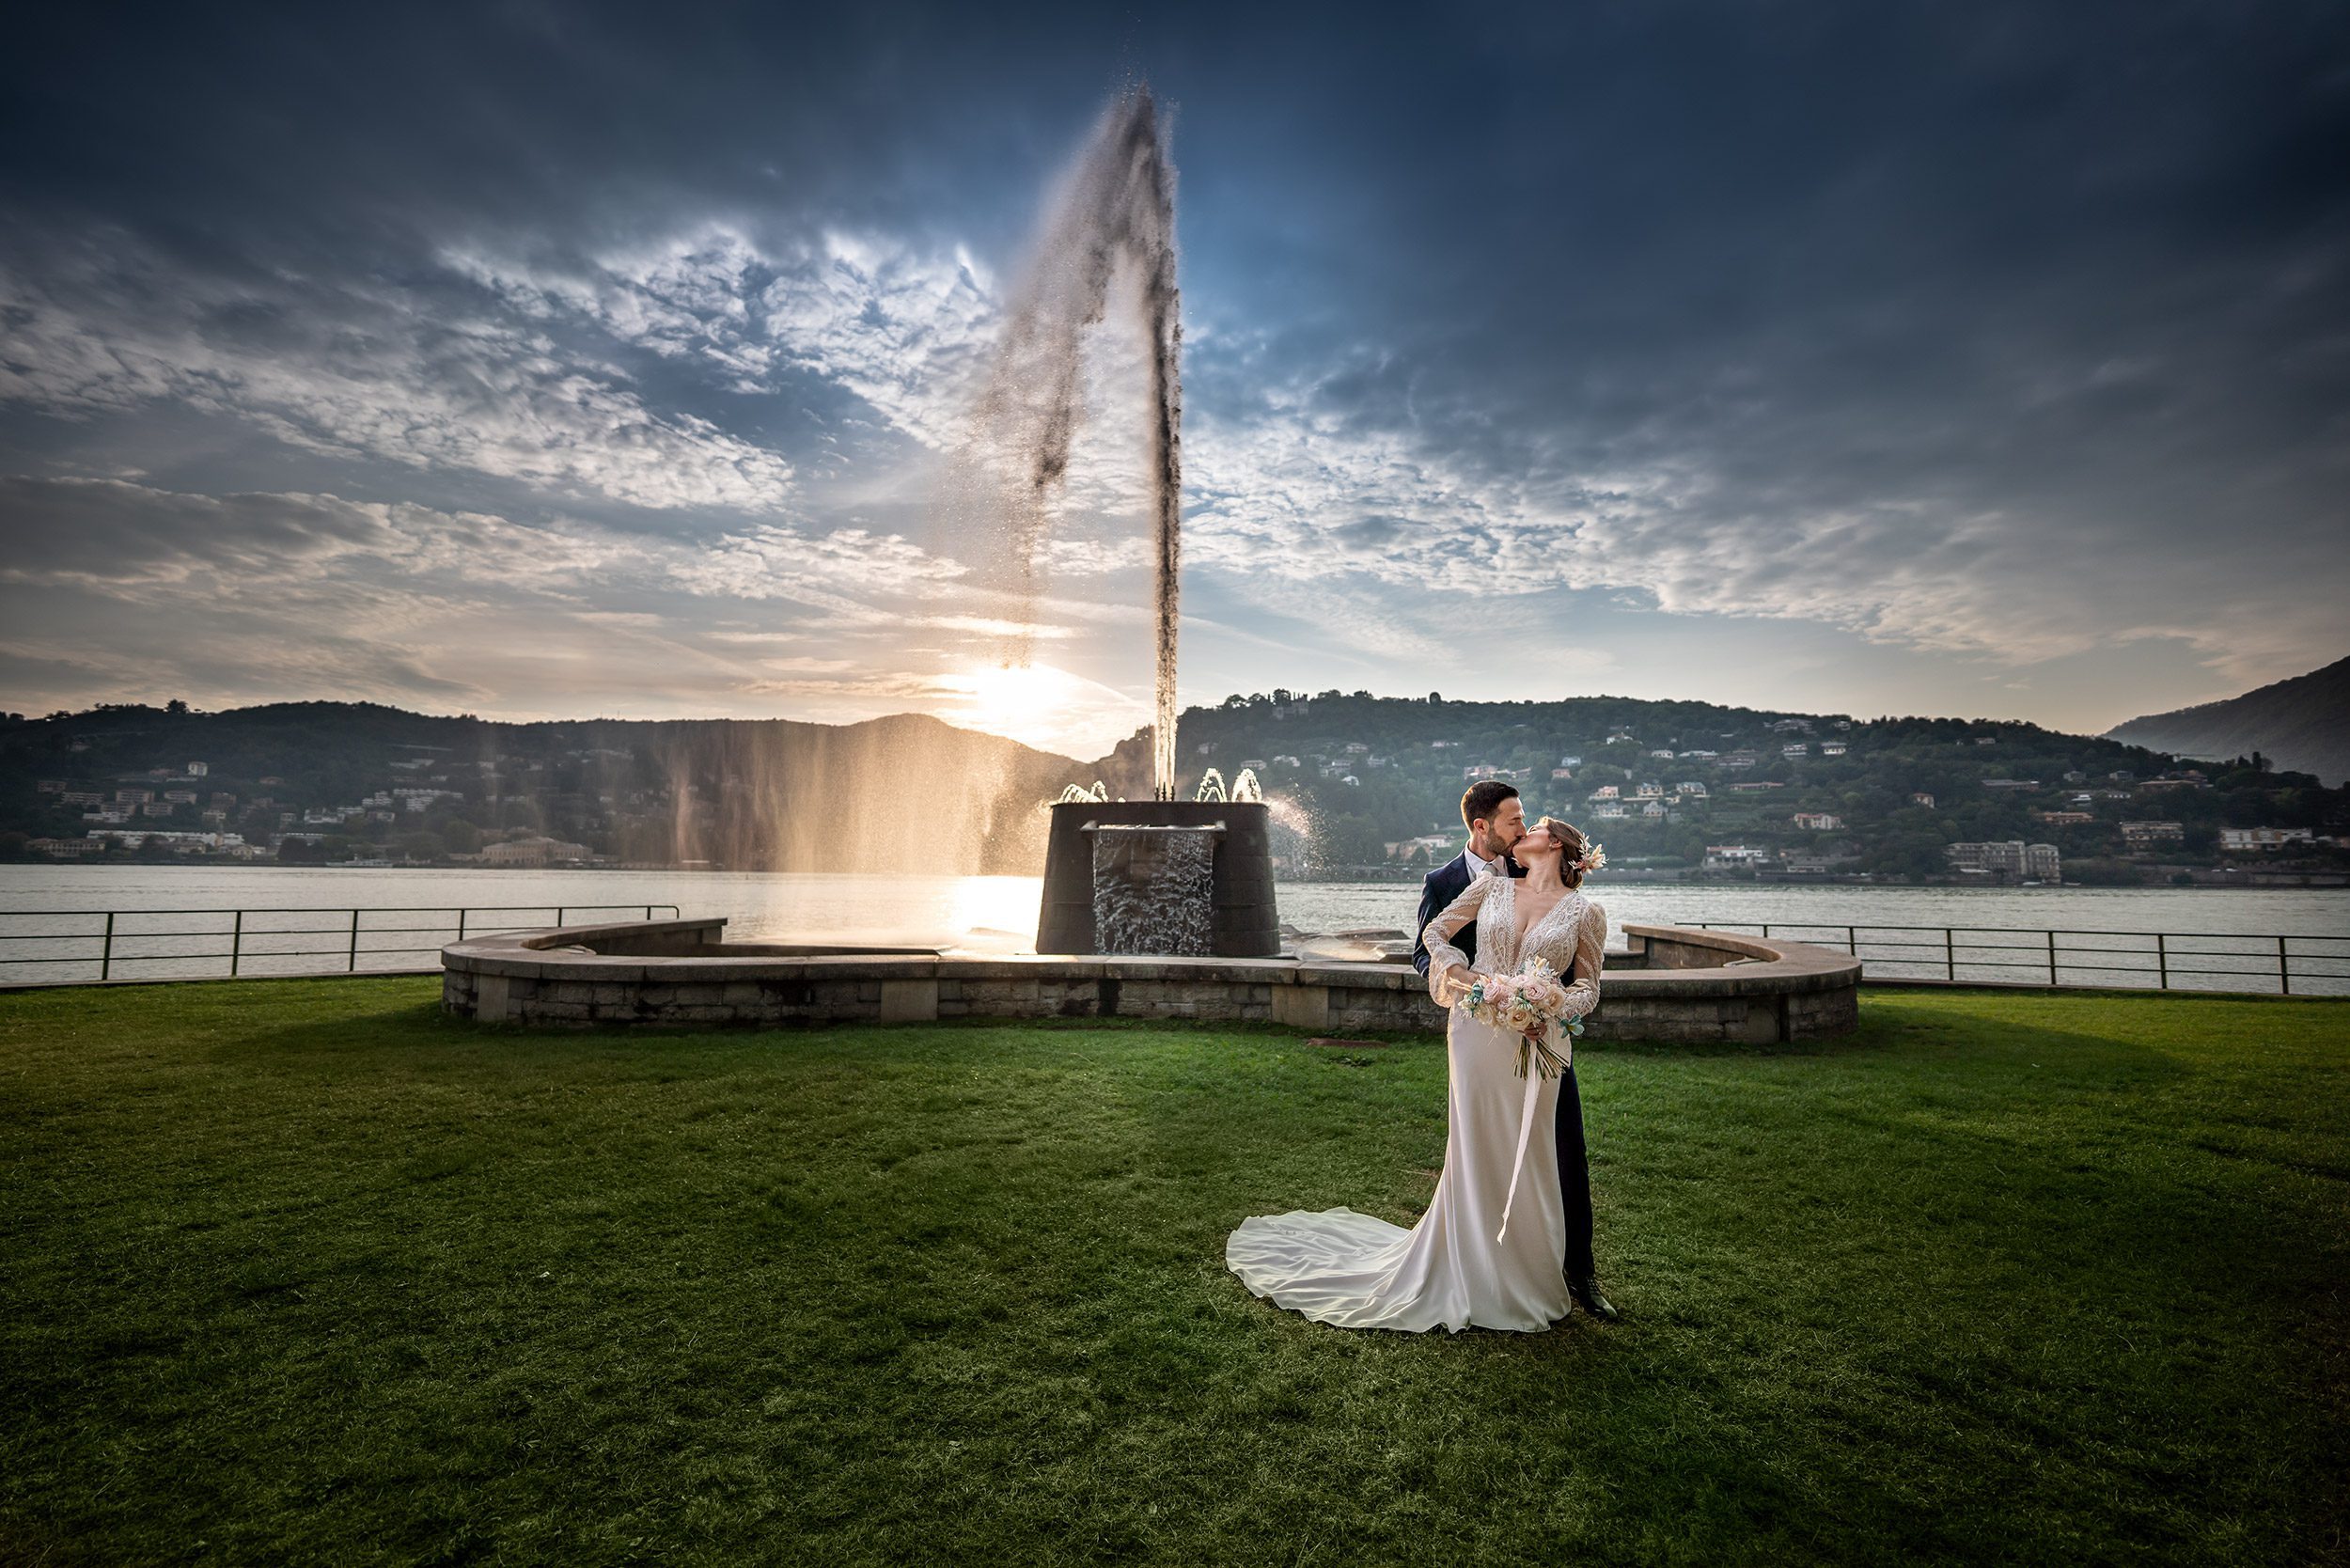 000 fotografo matrimonio reportage wedding ritratto sposi bacio fontana lago villa geno como 1